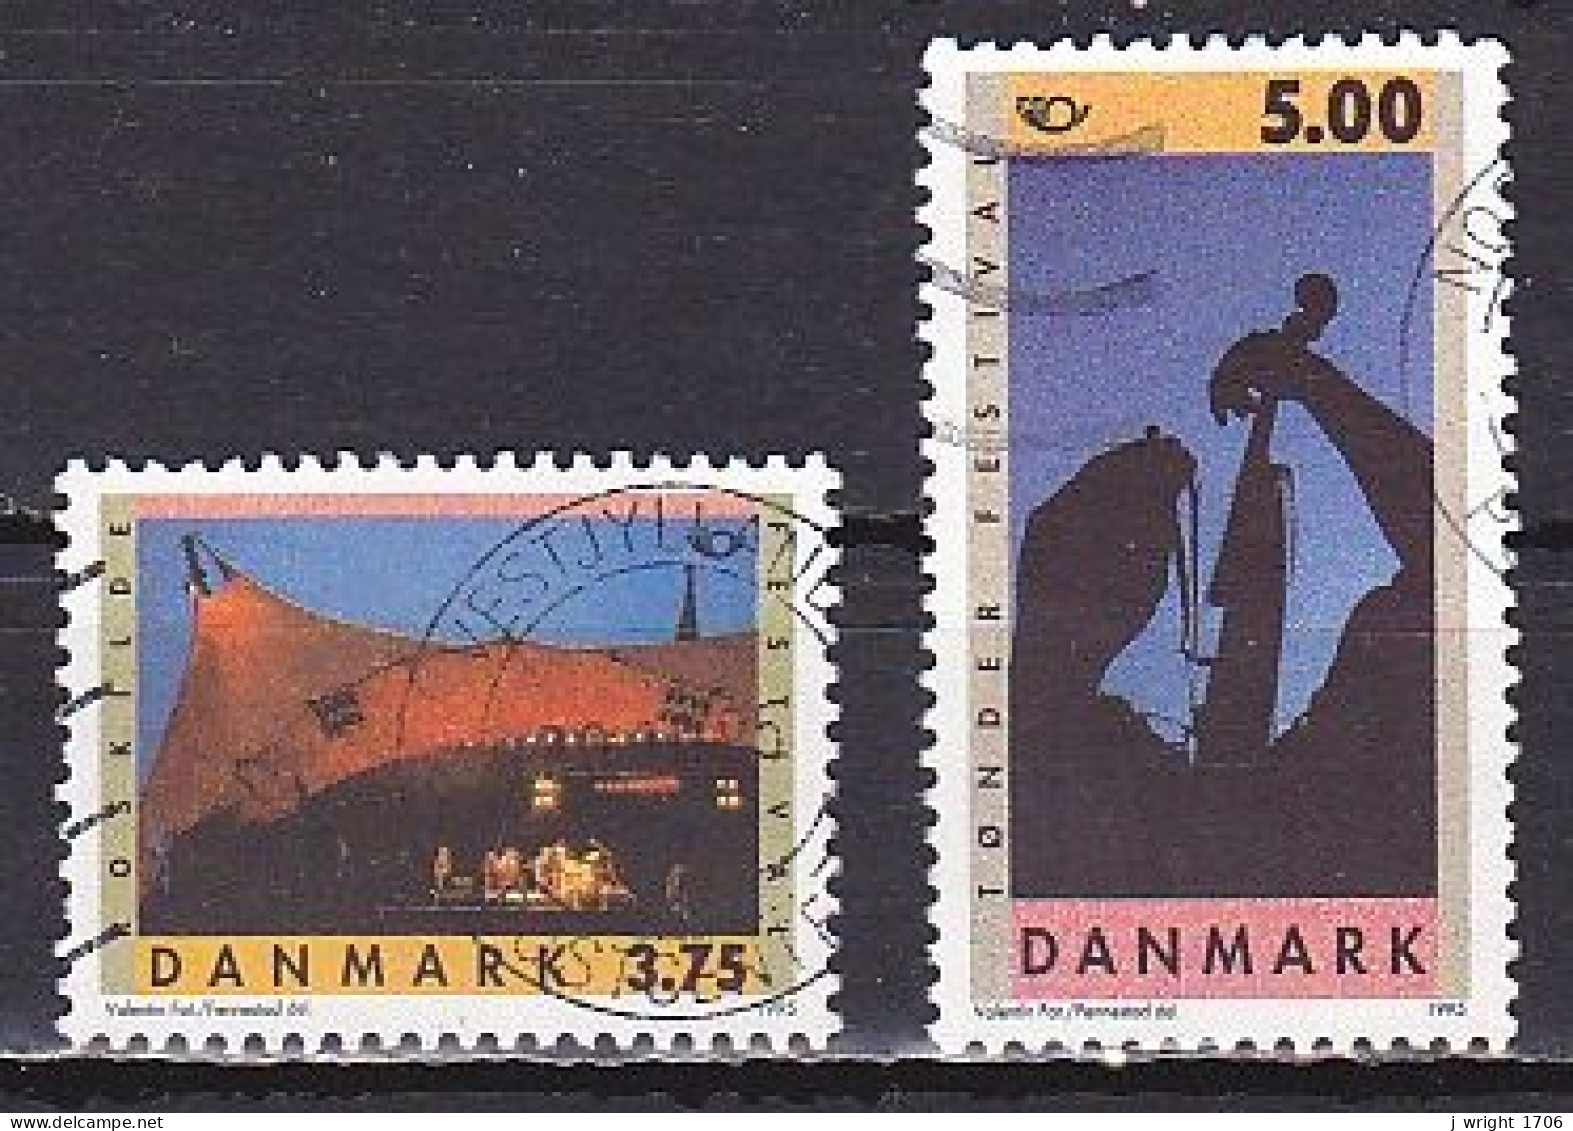 Denmark, 1995, Nordic Co-operation, Set, USED - Usati